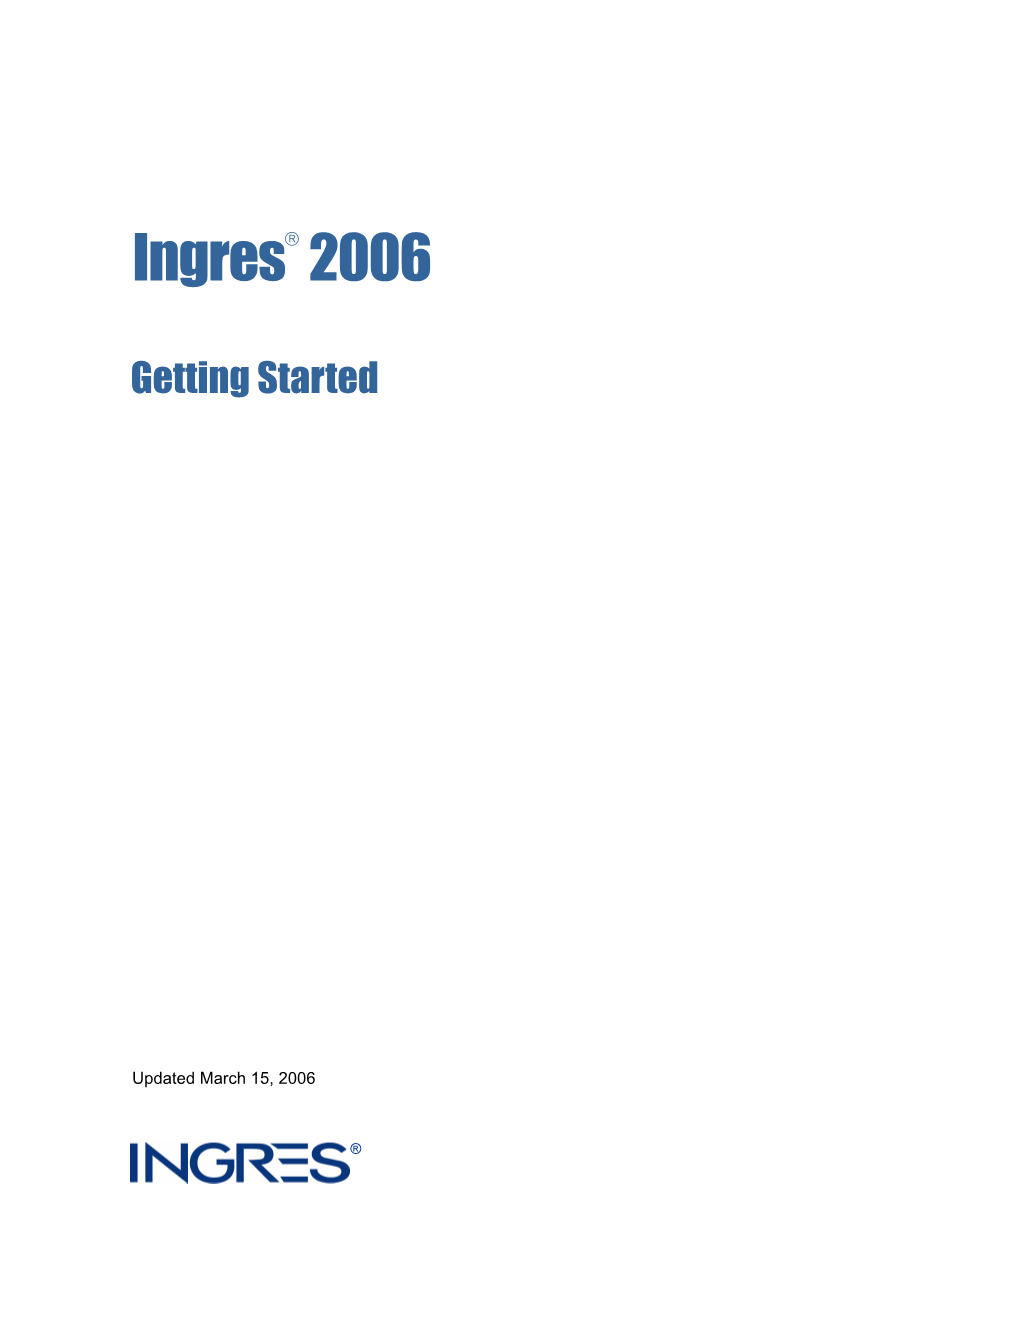 Ingres 2006 Getting Started